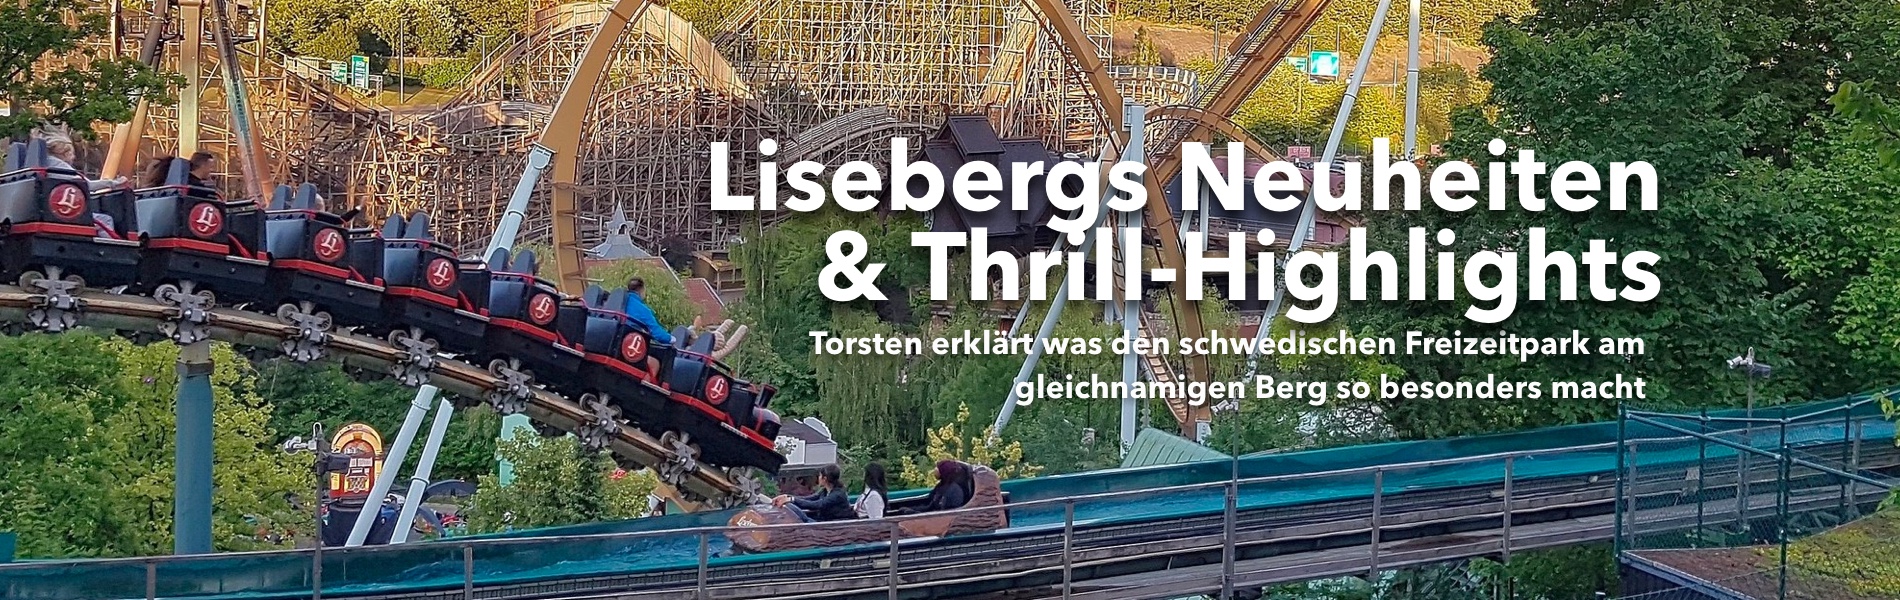 Teaser Lisebergs Neuheiten & Thrill-Highlights